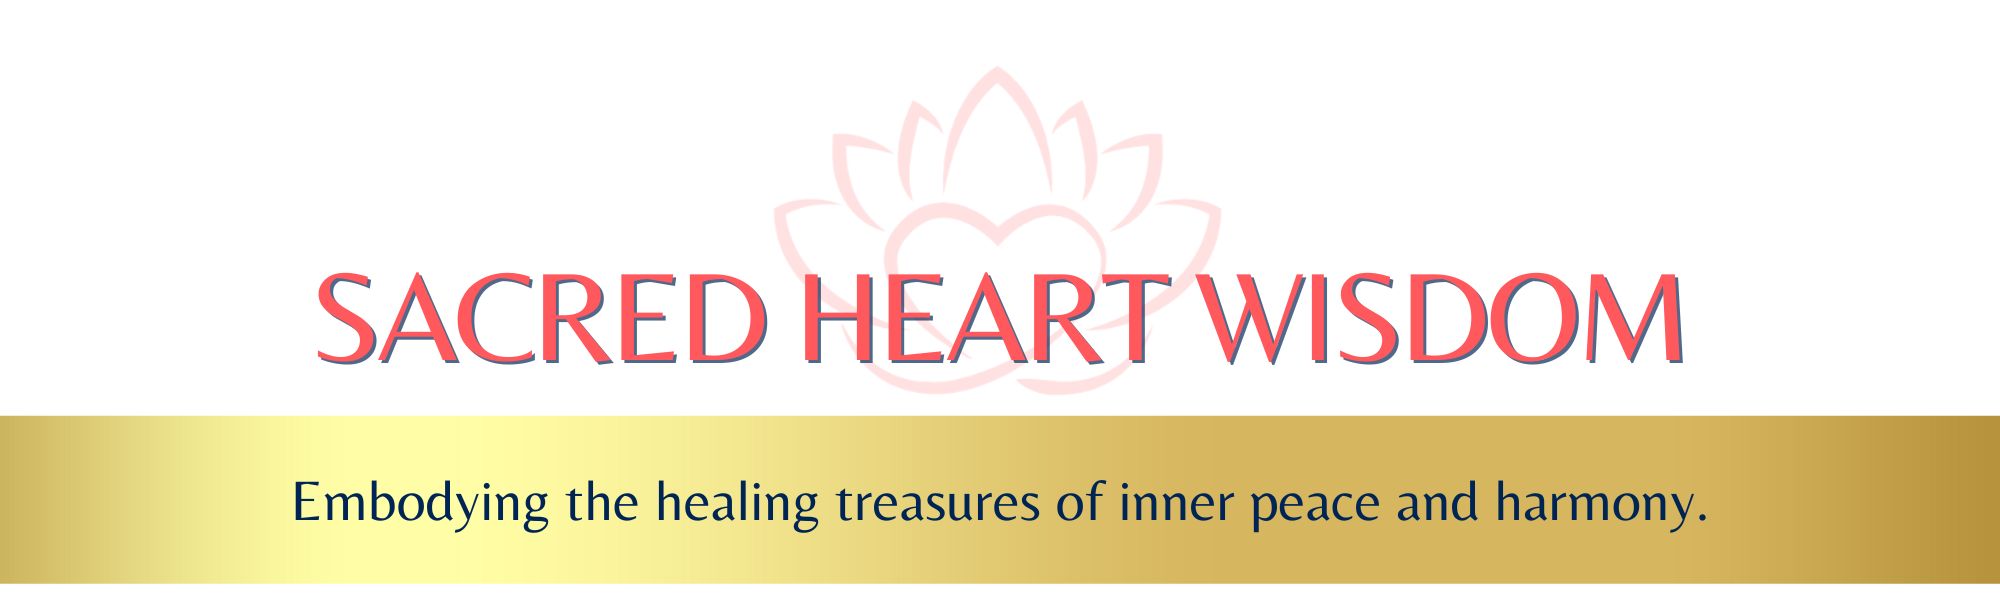 Sacred Heart Wisdom book banner